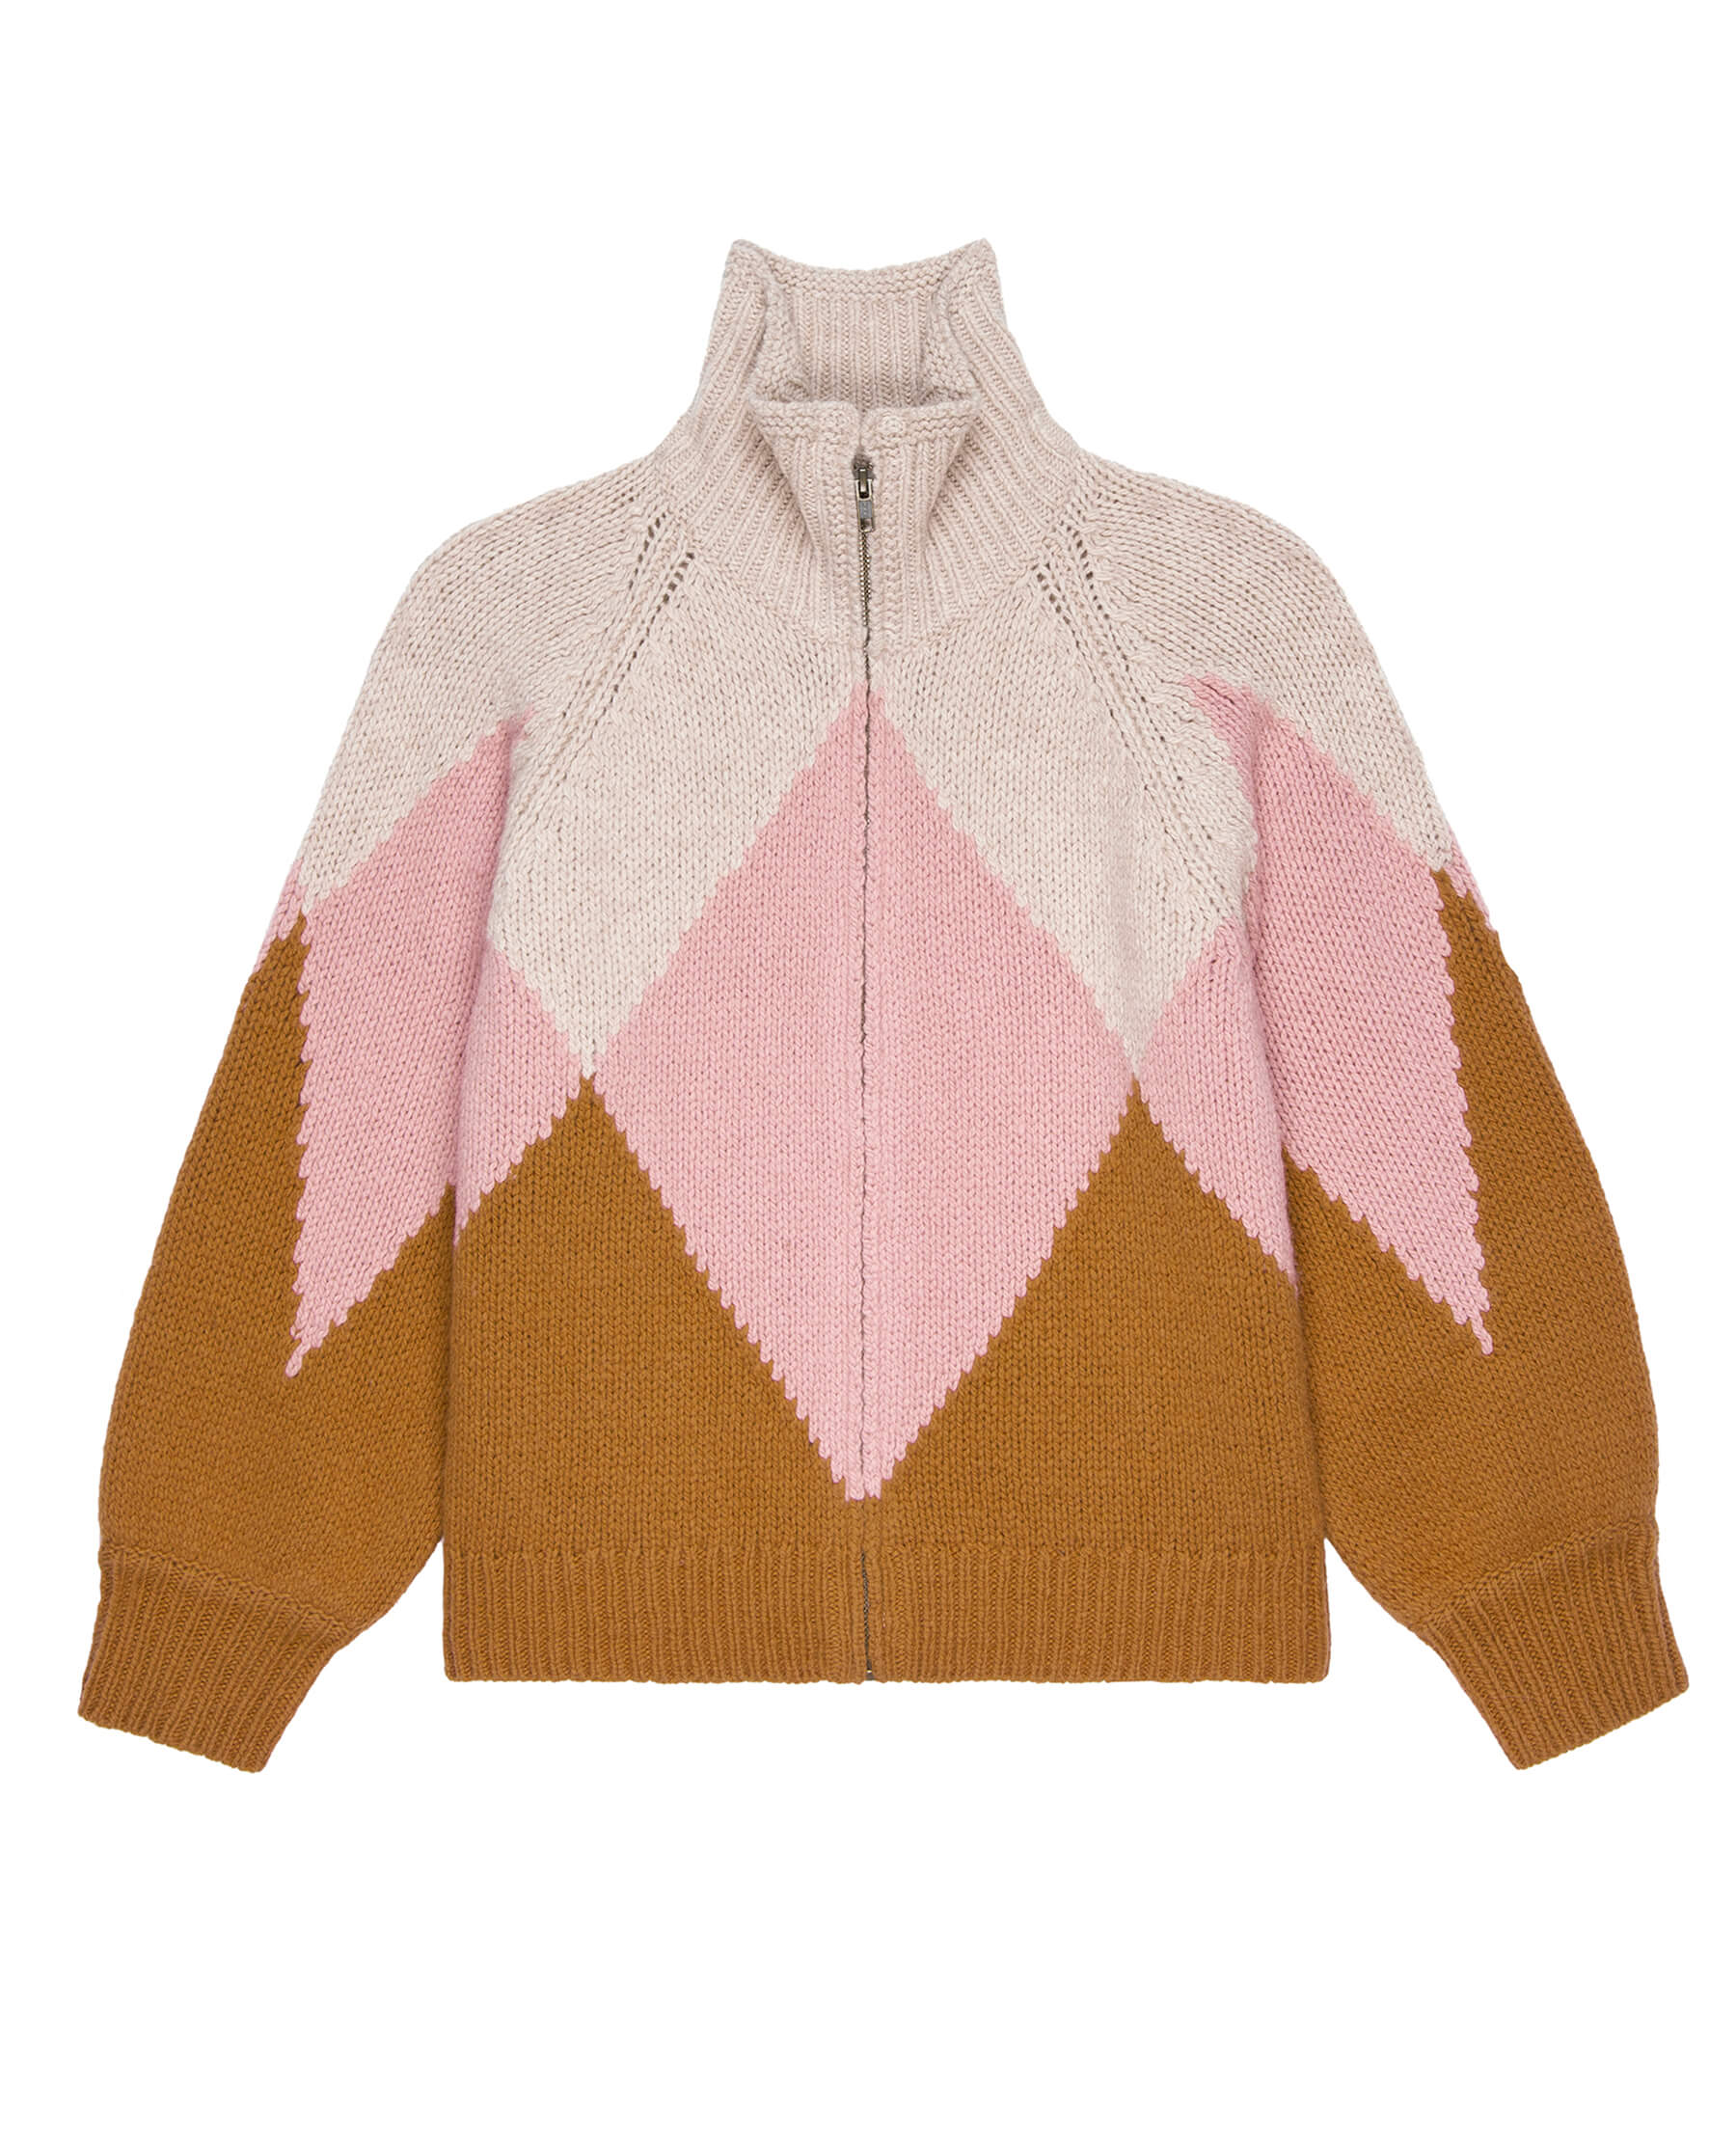 The Vista Full-Zip Sweater. -- Golden Hour Argyle